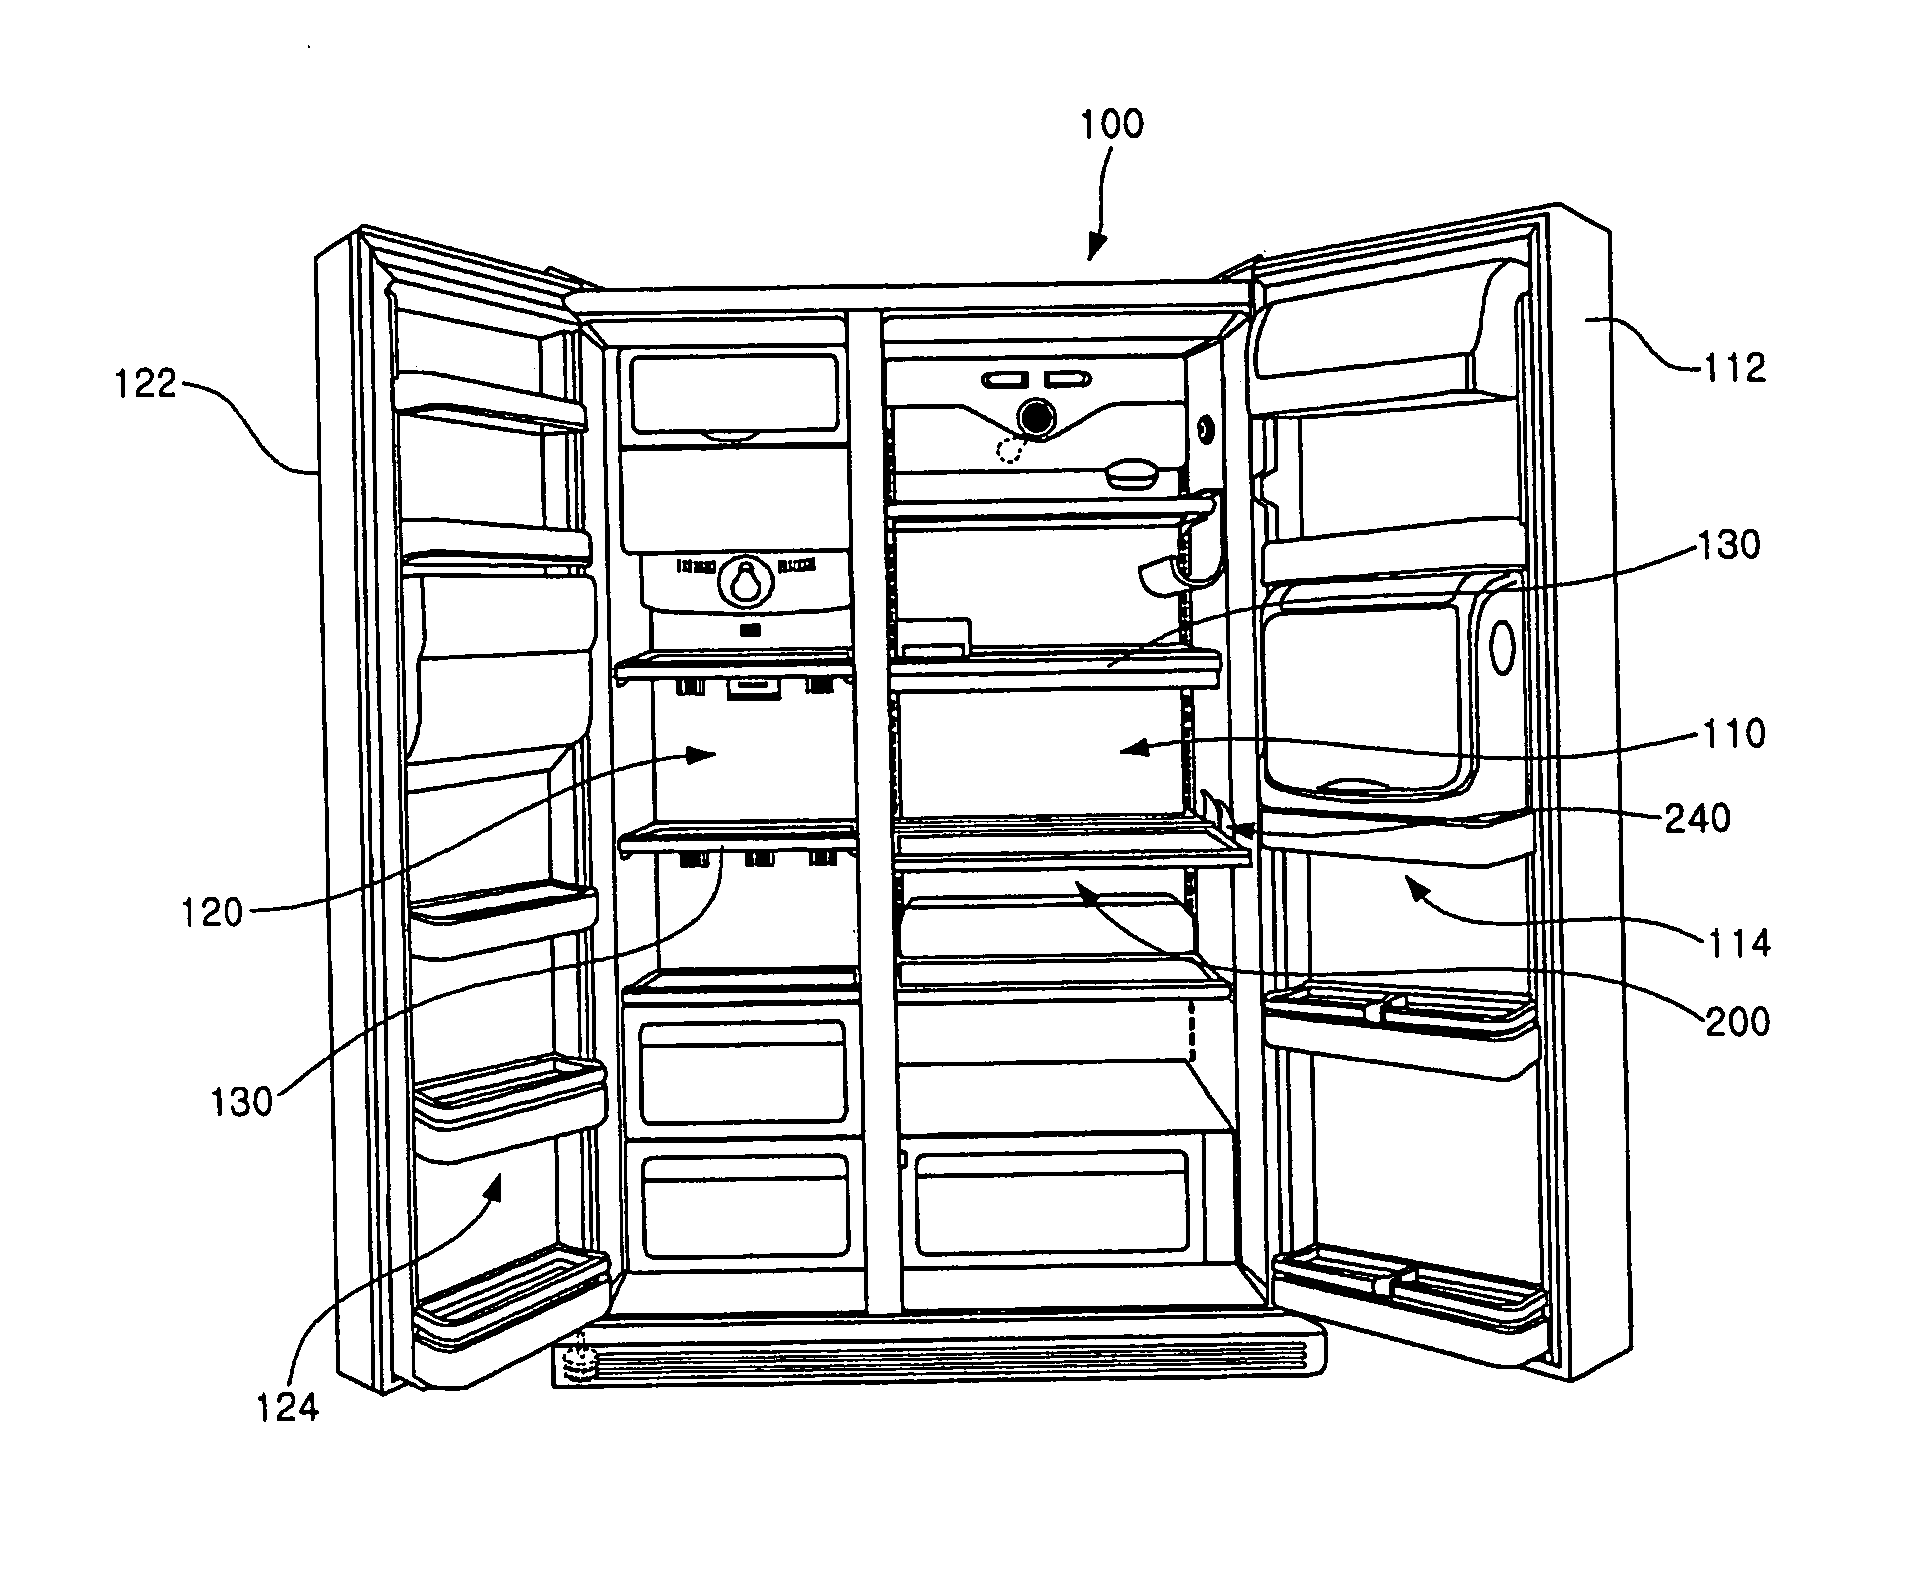 Refrigerator with height adjustable shelf